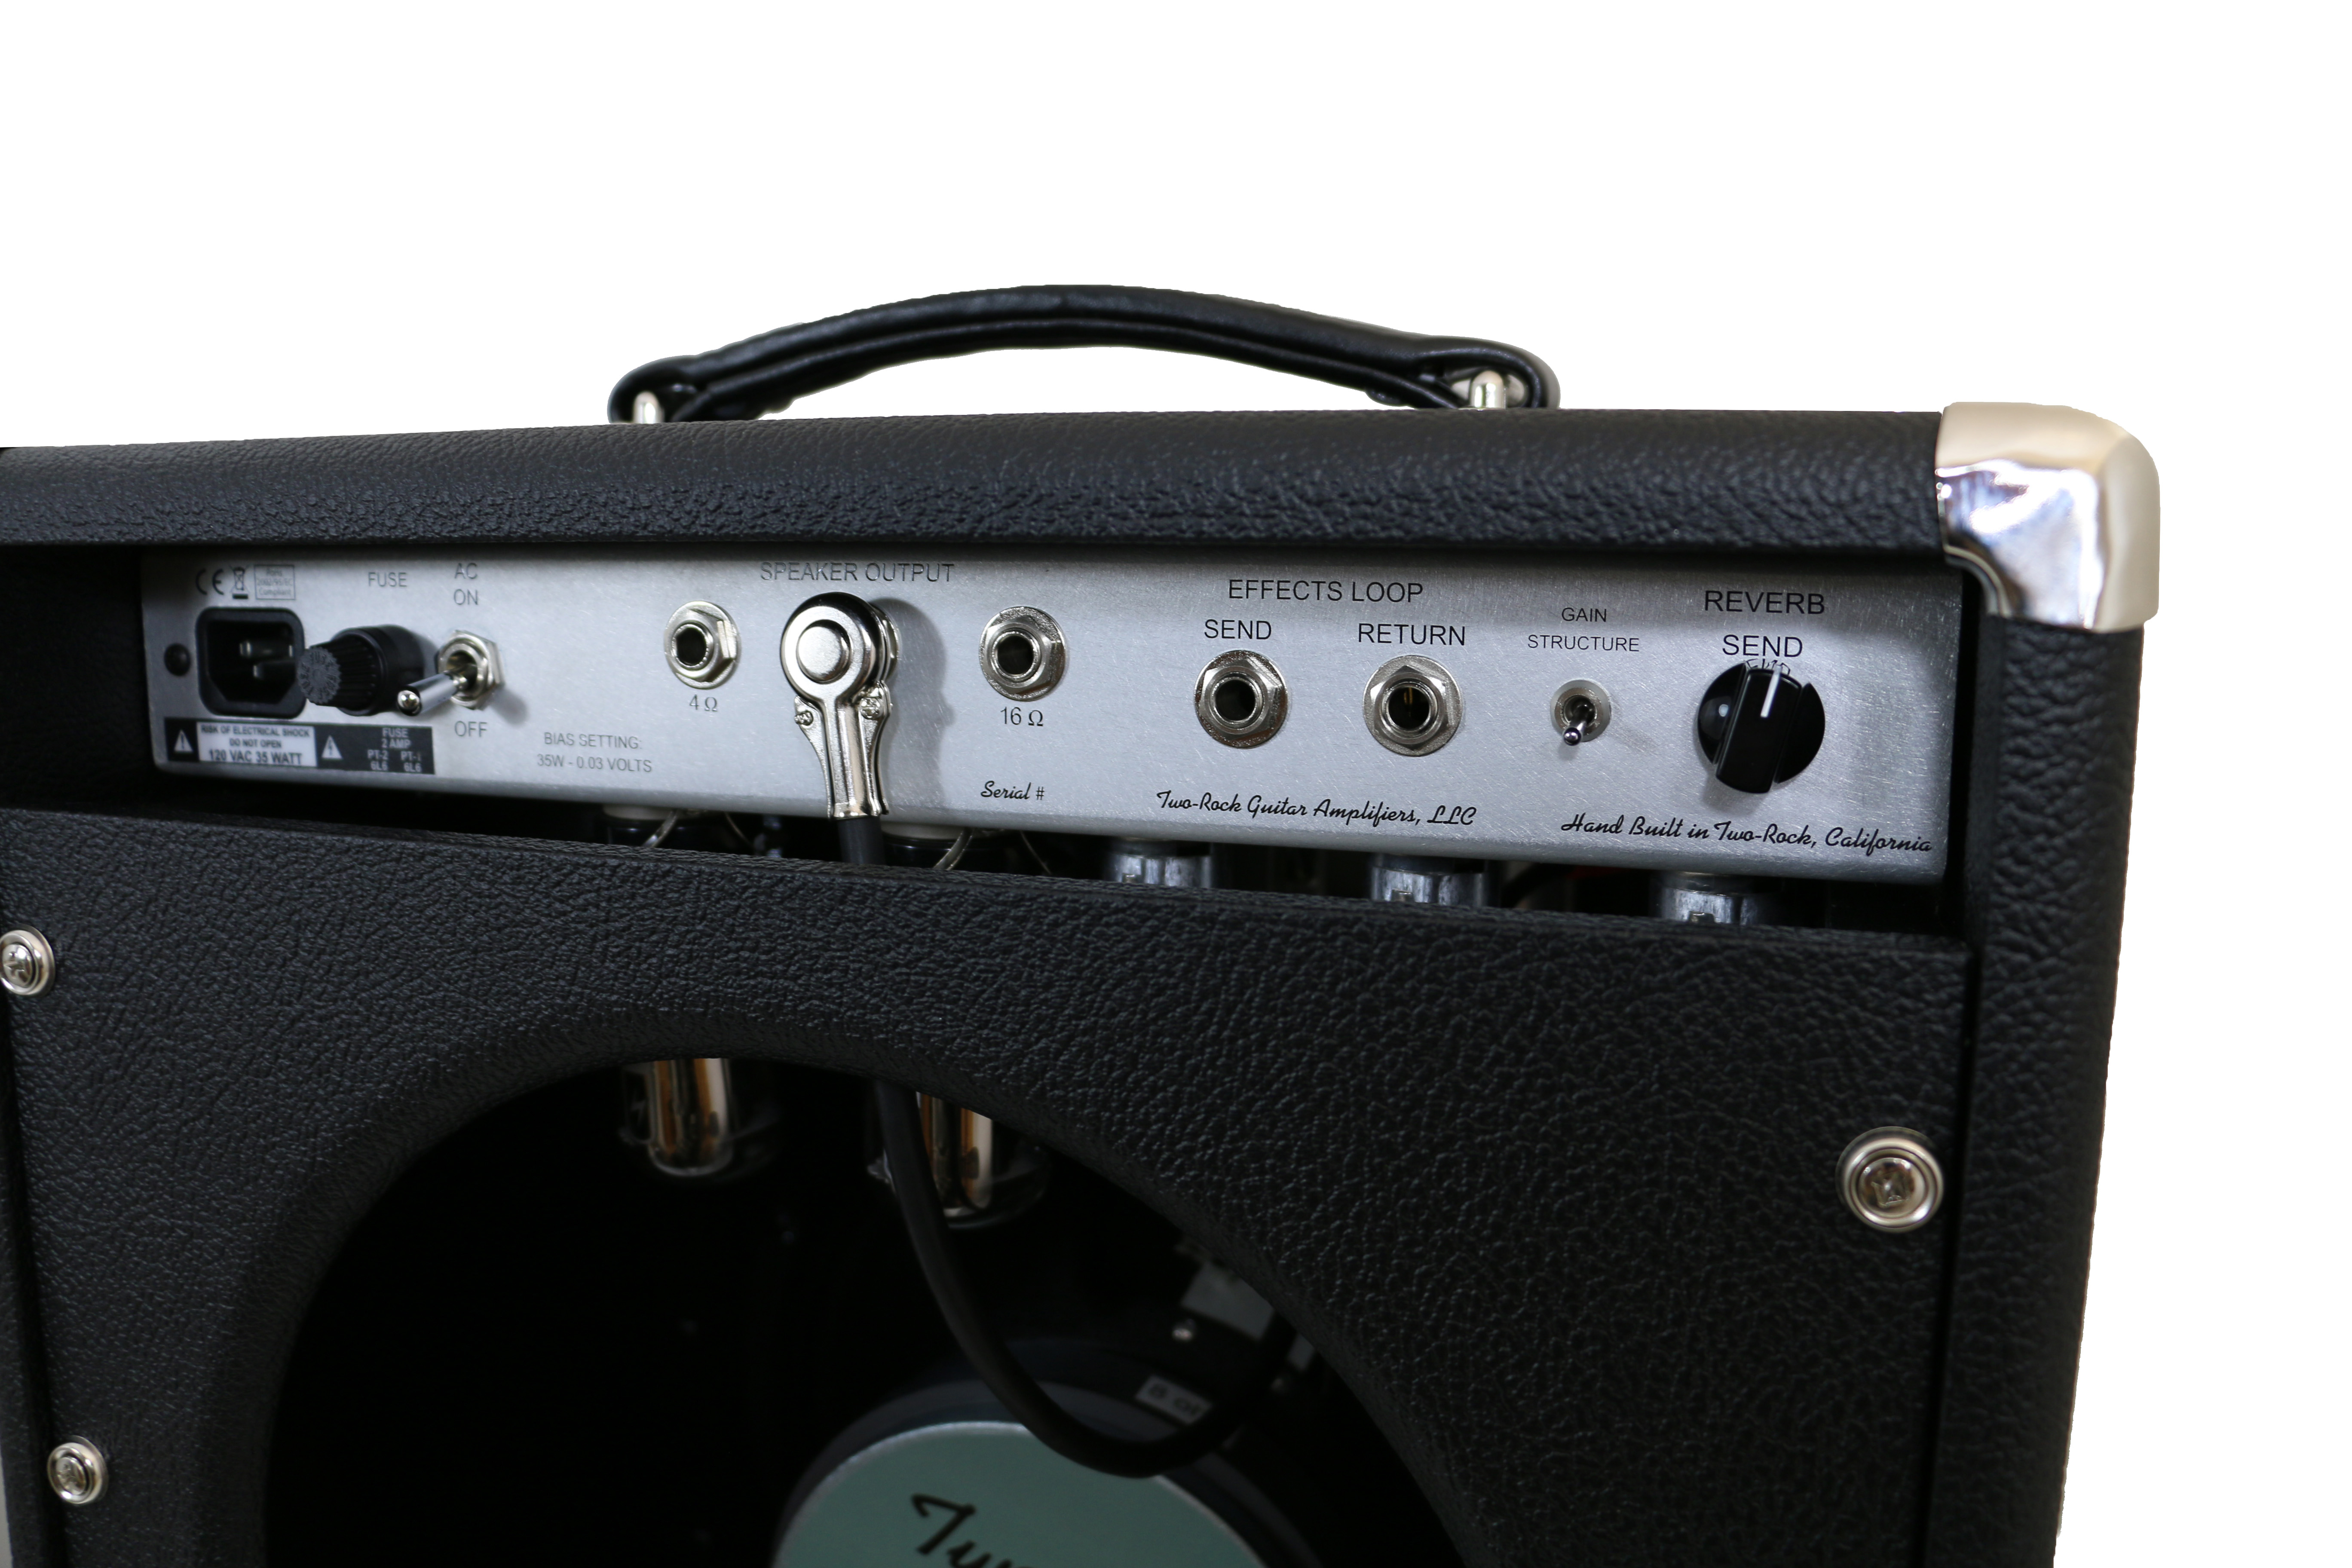 Studio Signature Two Rock Amplifiers